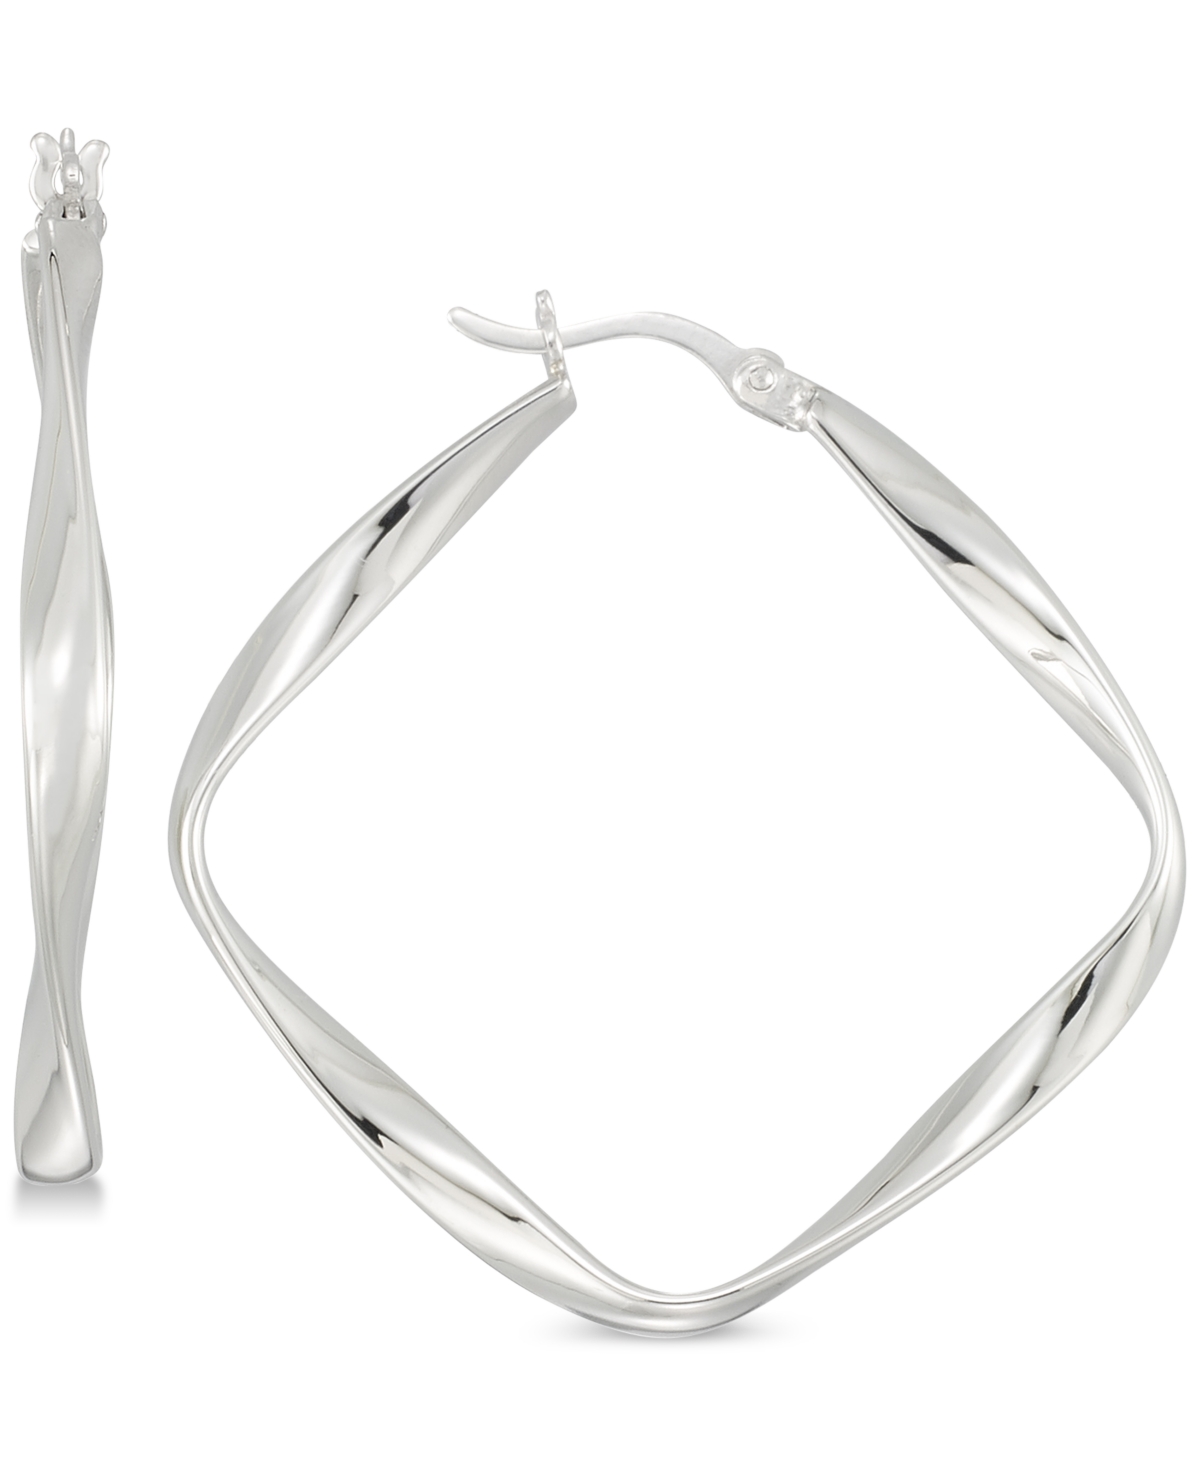 Twisted Square Hoop Earrings in Sterling Silver - Silver